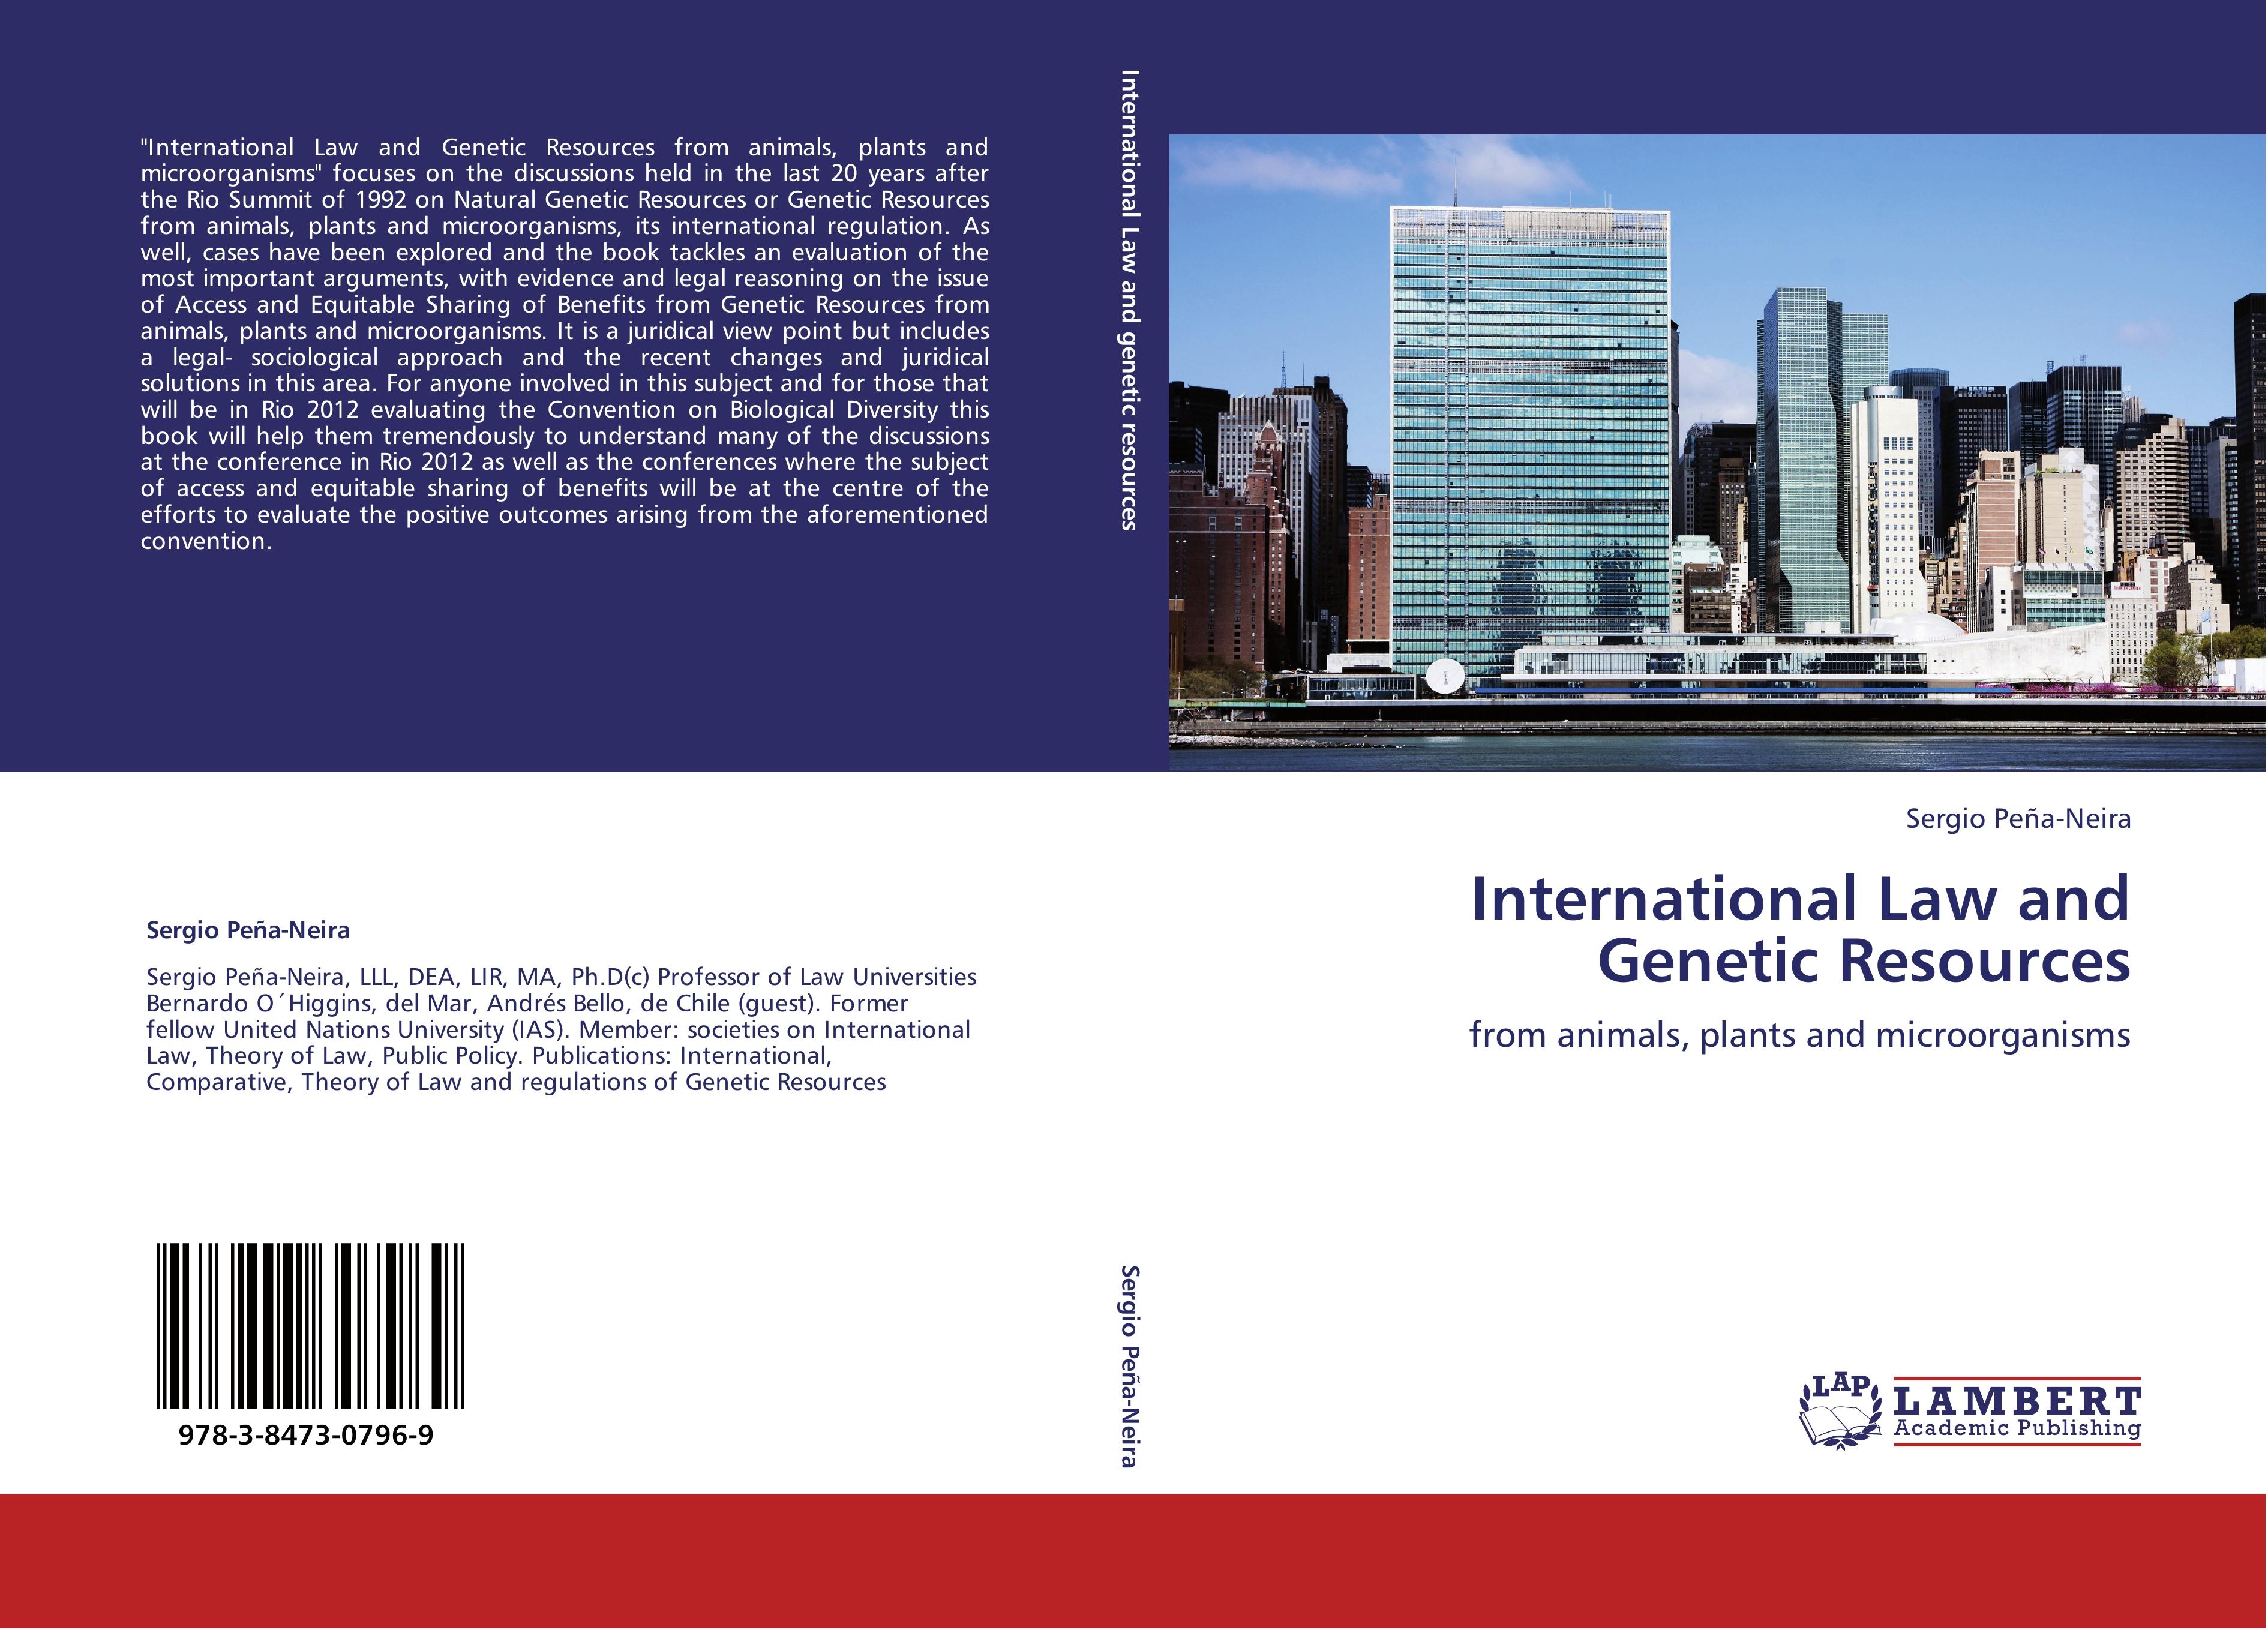 International Law and Genetic Resources - Sergio Peña-Neira